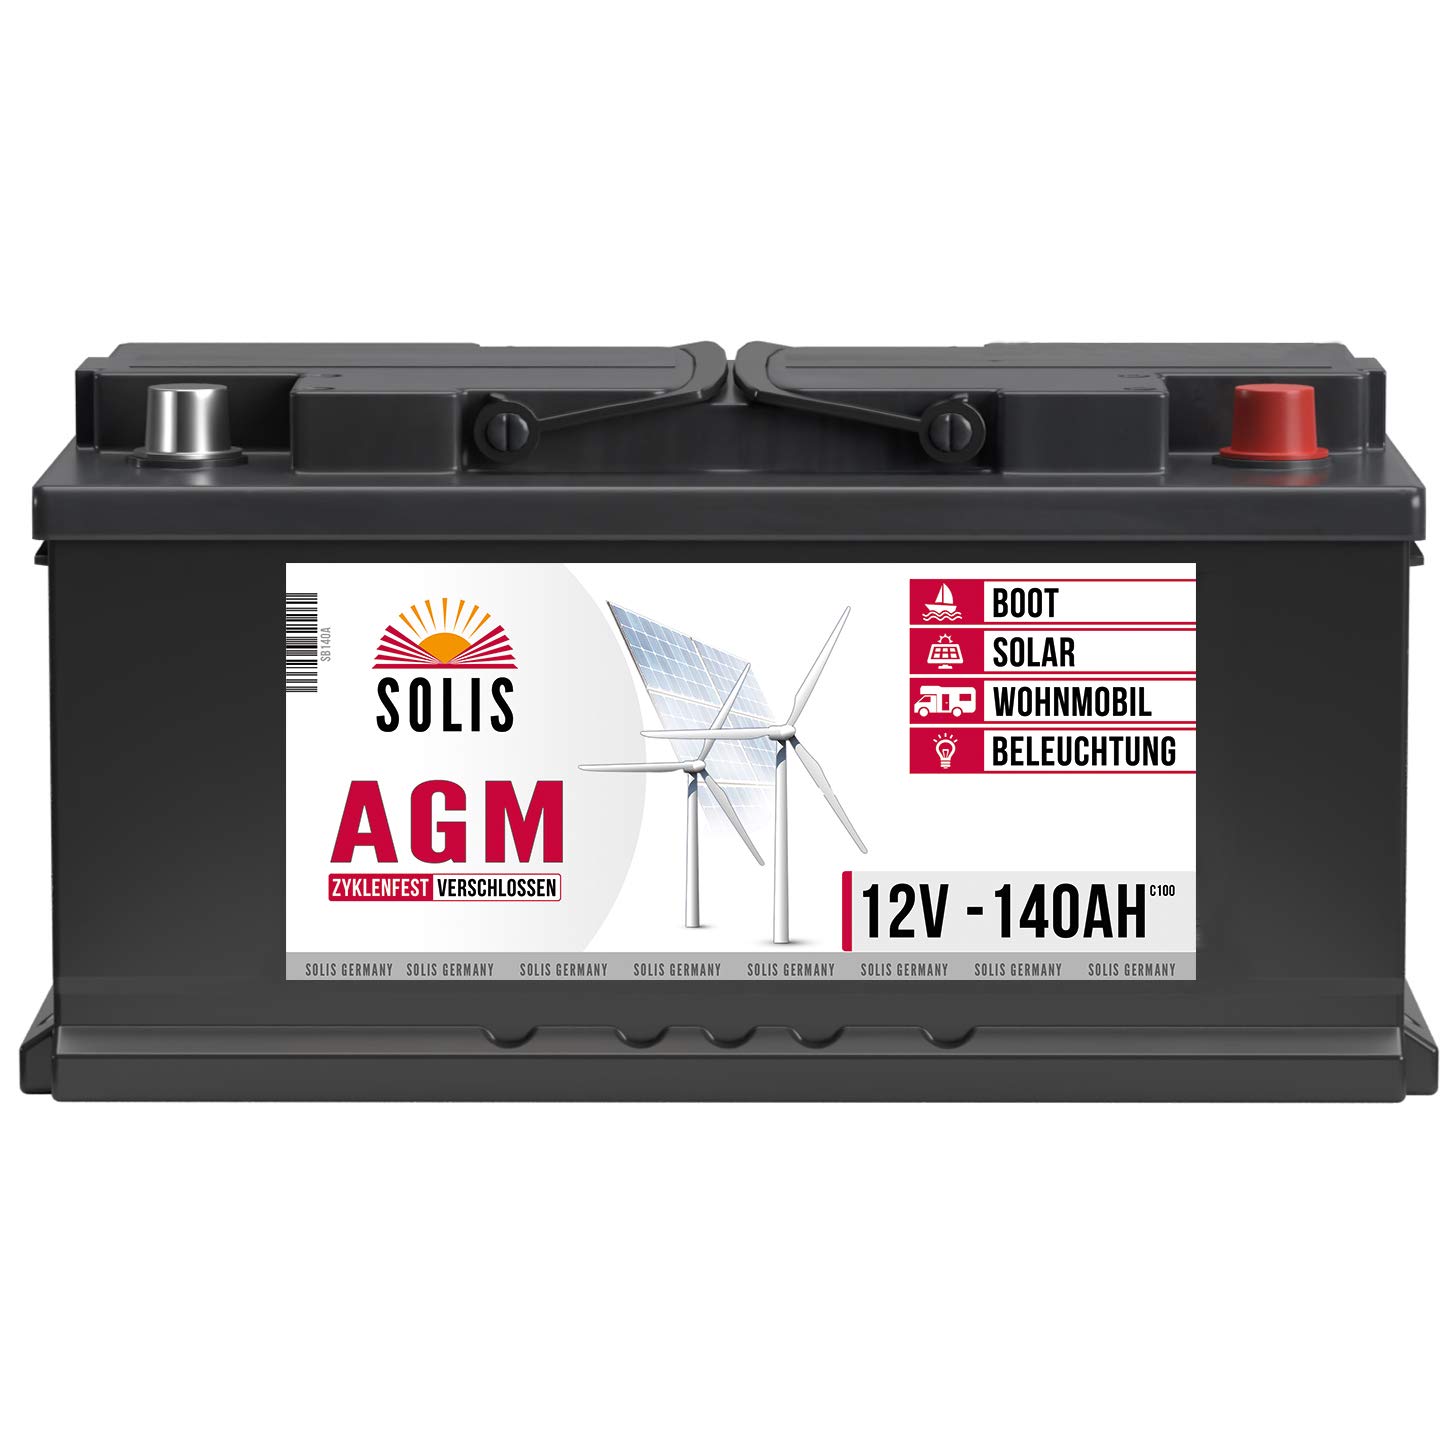 SOLIS Solarbatterie 12V 140Ah AGM Batterie Versorgungsbatterie Wohnmobil Verbraucher Boot Wohnwagen Camping Batterie zyklenfest (140AH 12V) von SOLIS